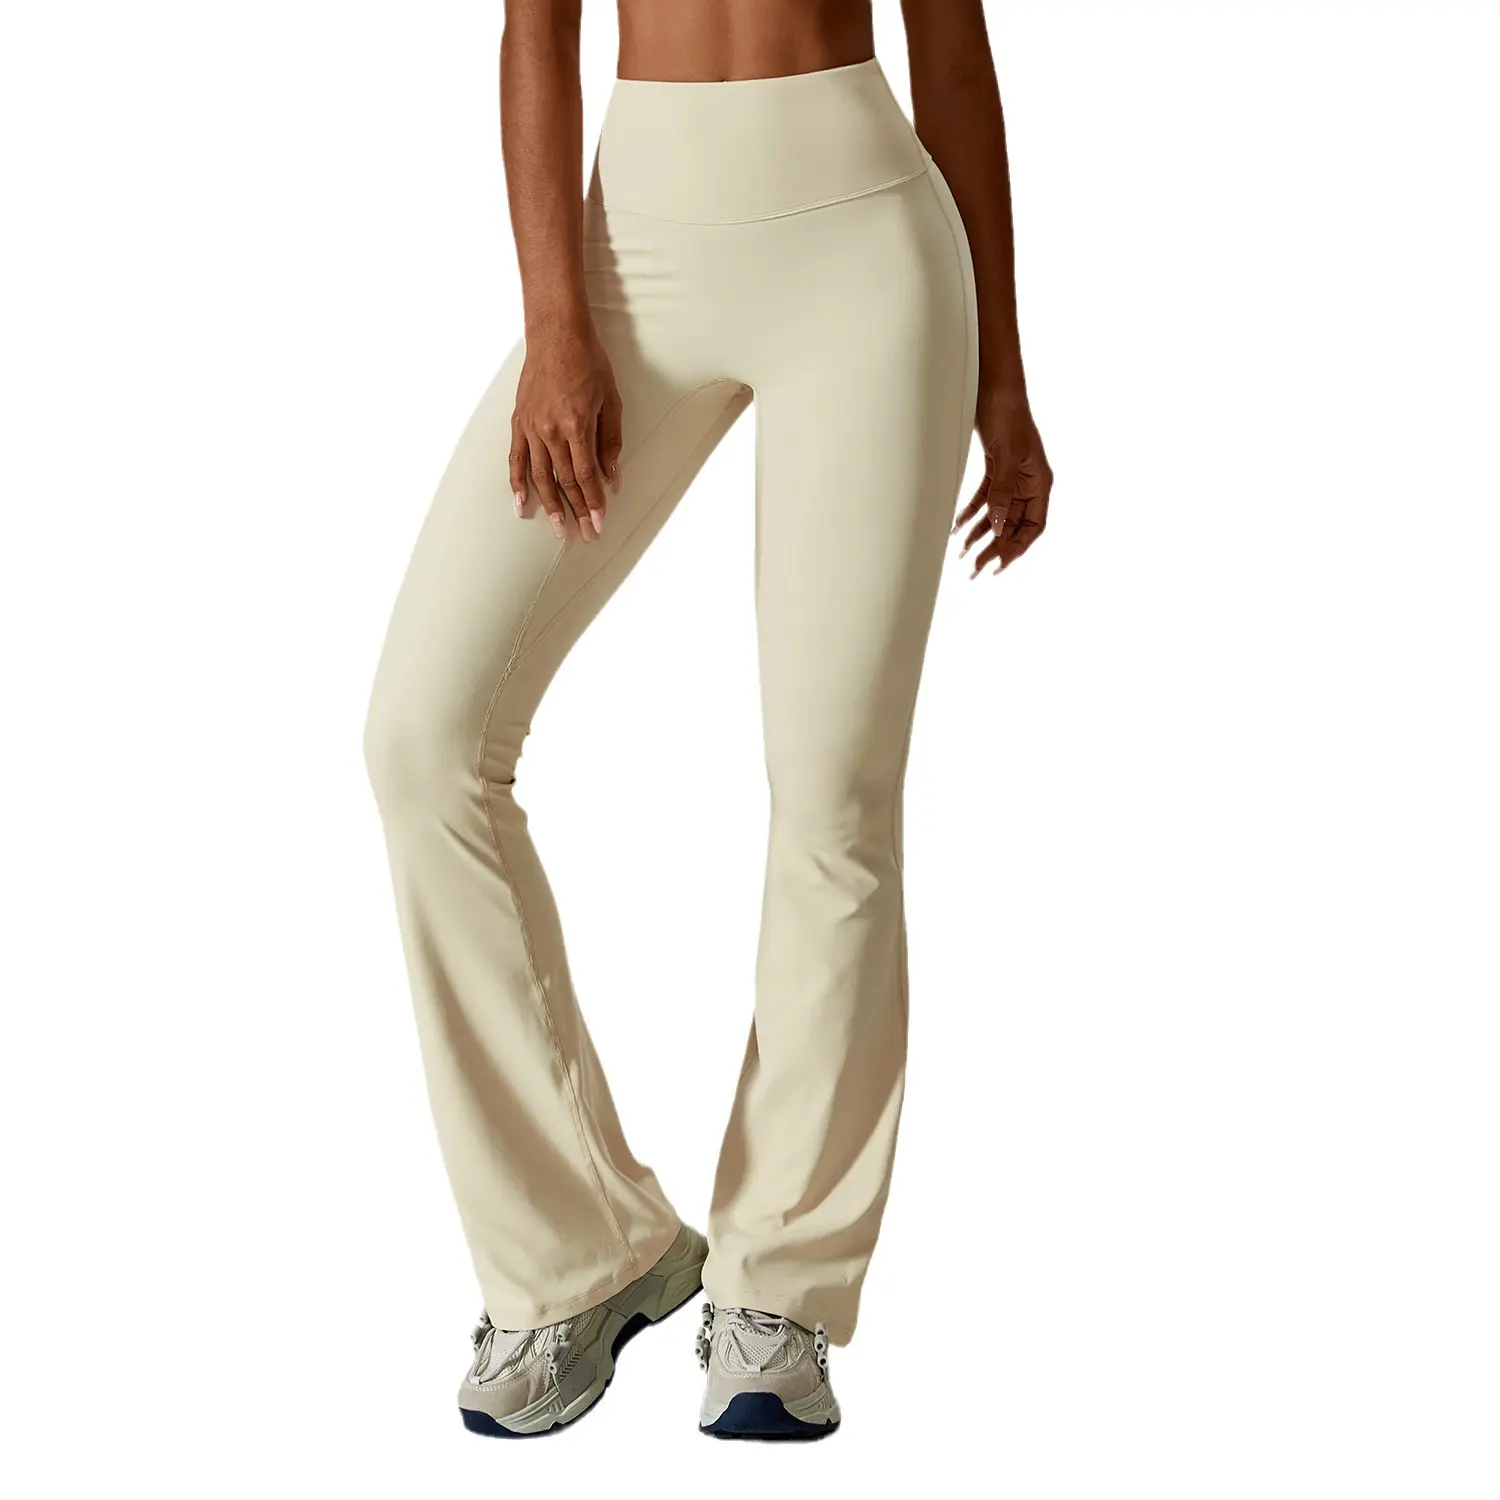 Nuovi pantaloni attillati a gamba larga lulu pantaloni a zampa di Yoga pantaloni a vita alta micro elasticizzati pantaloni sportivi casual lulu yoga leggings